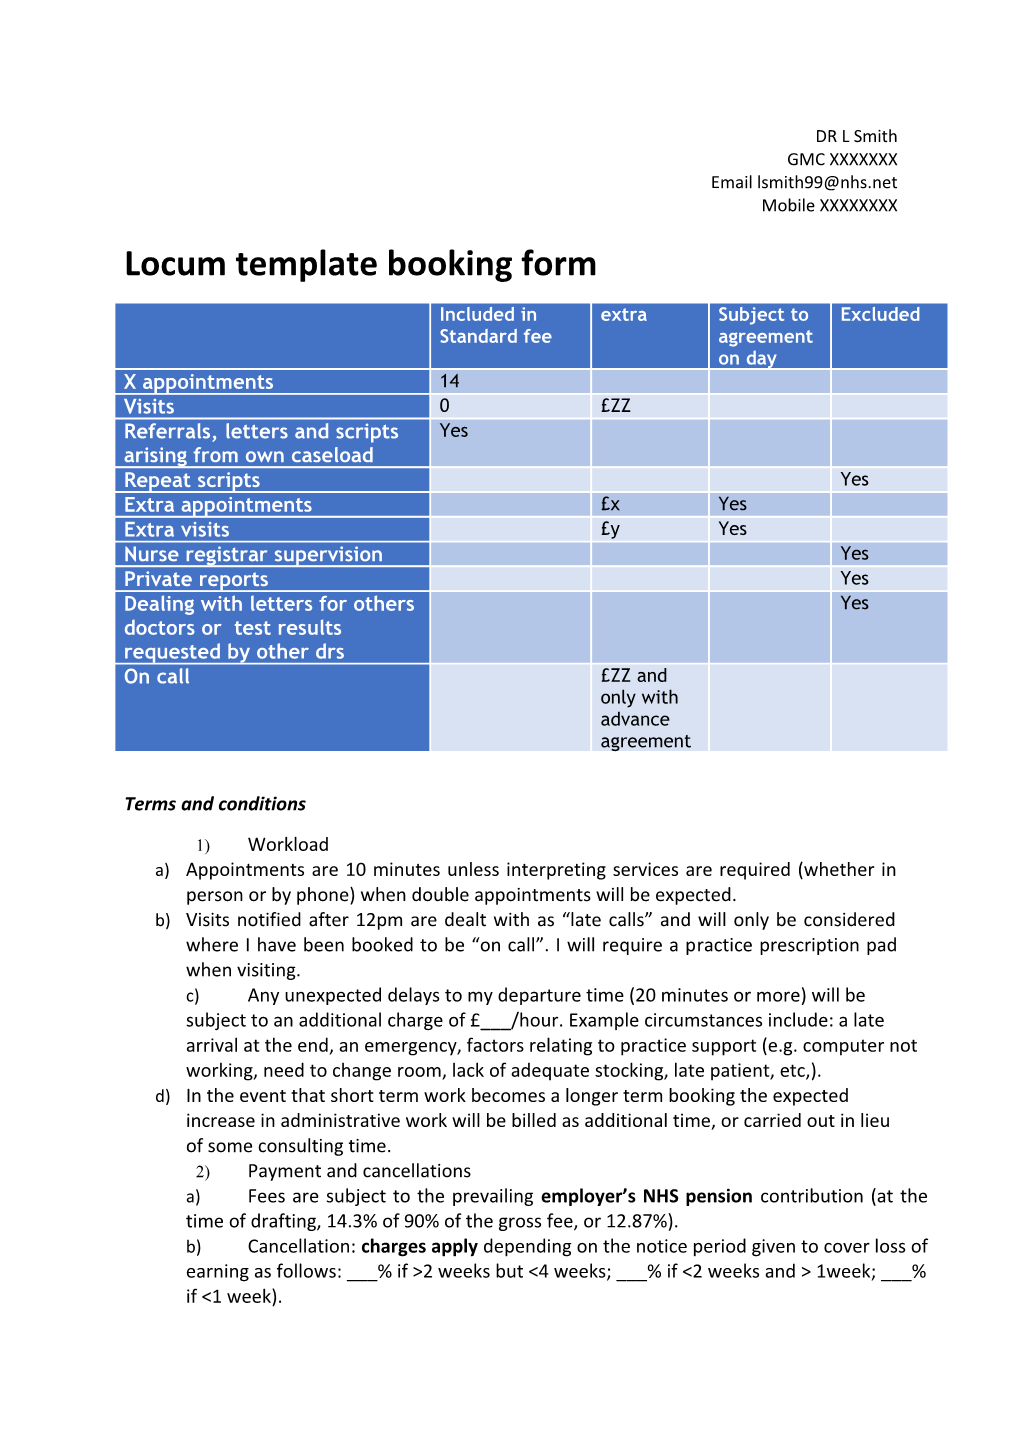 Locum Template Booking Form